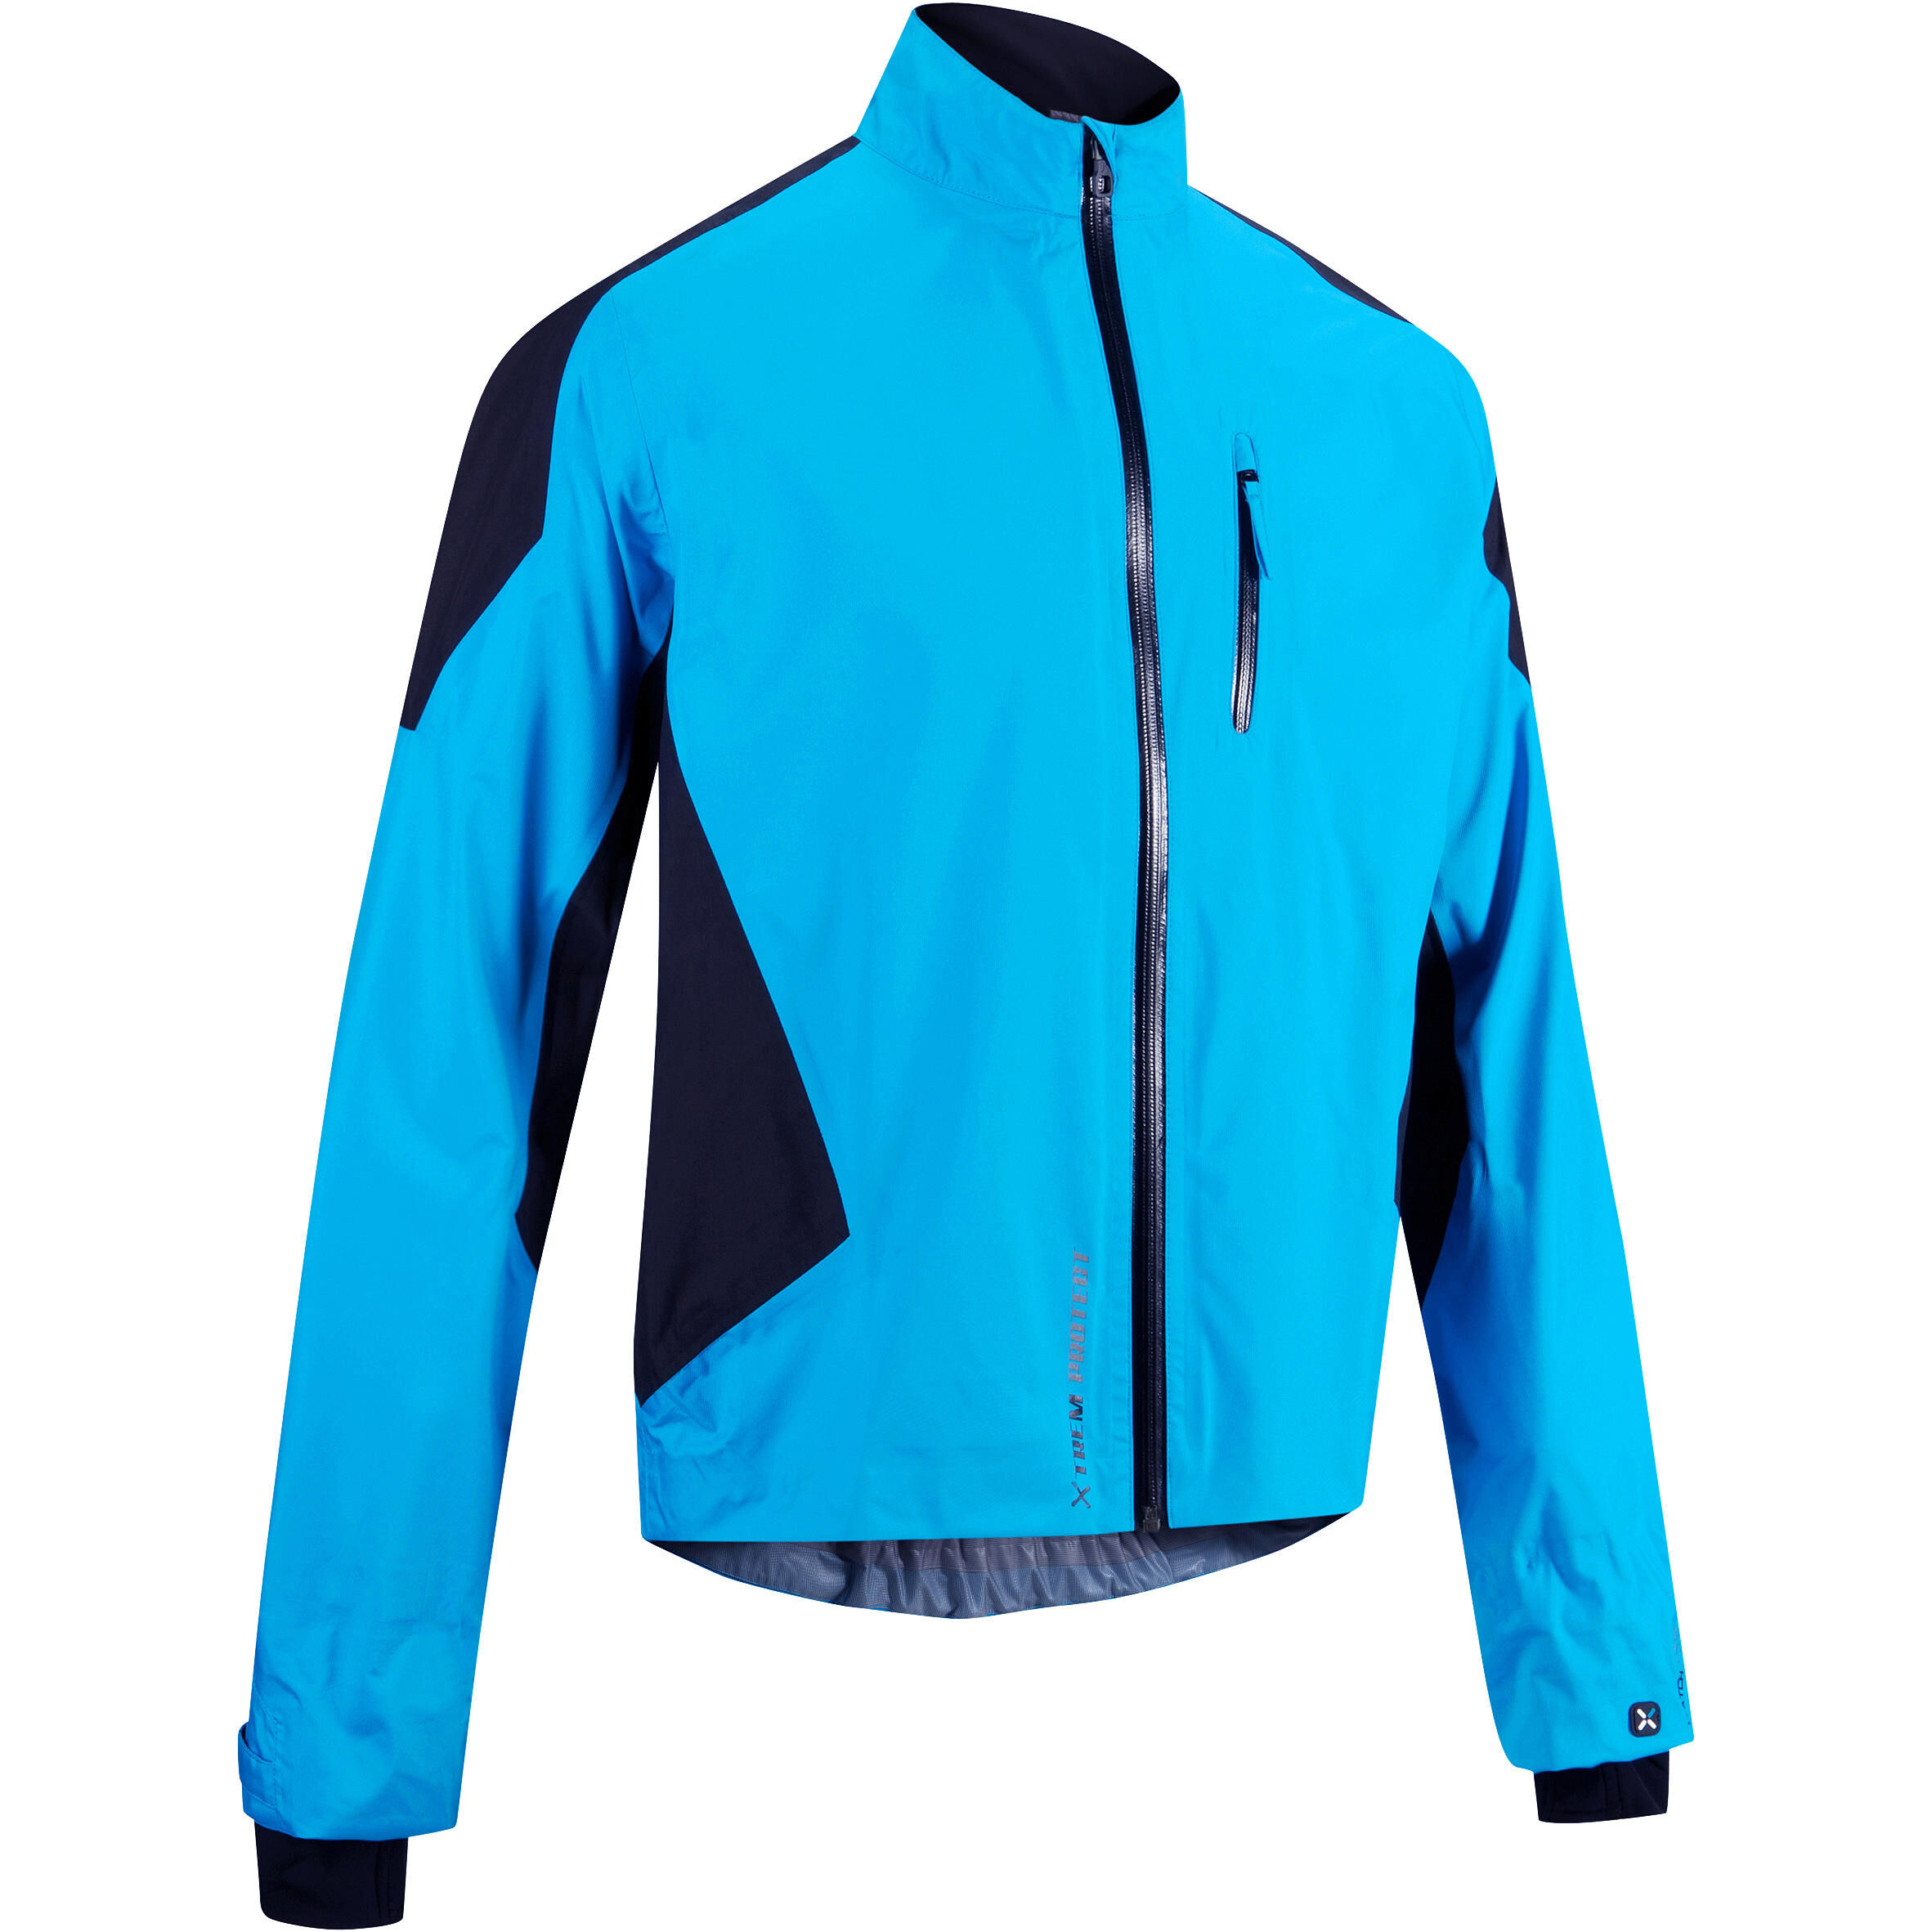 ROCKRIDER 900 Mountain Biking Rainproof Jacket - Blue/Black